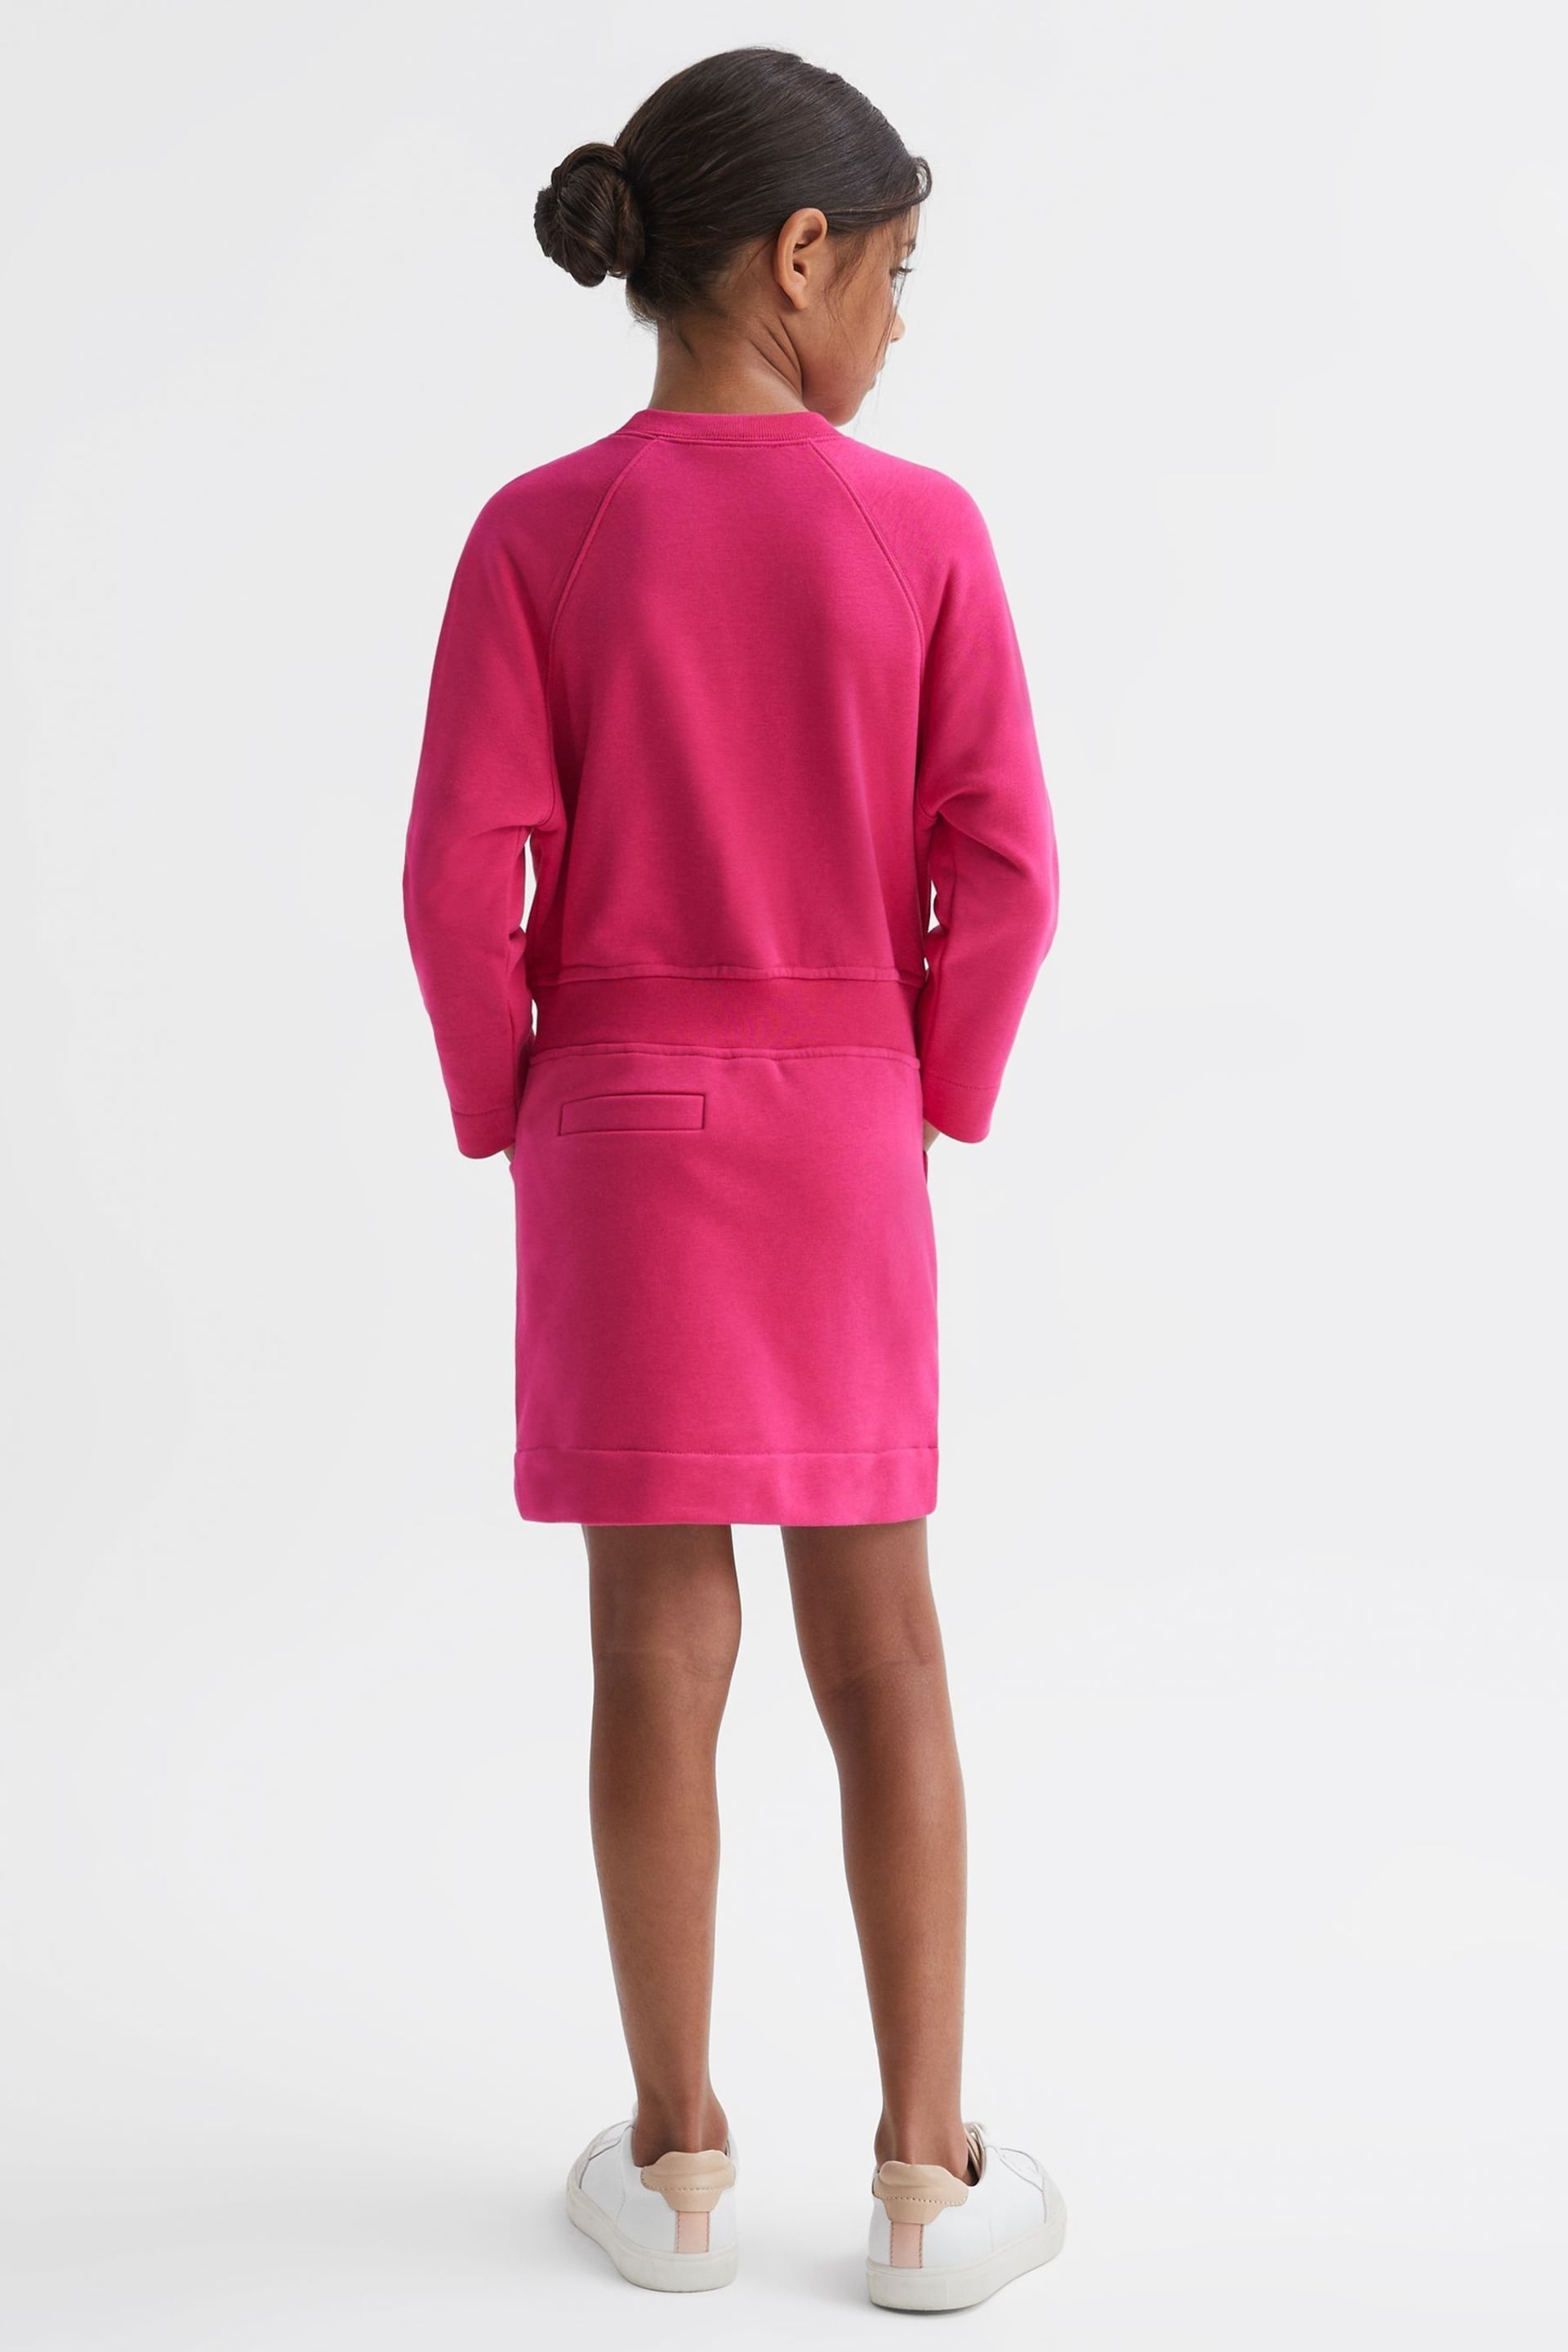 Reiss Pink Janine Junior Sweatshirt Dress - Image 5 of 6